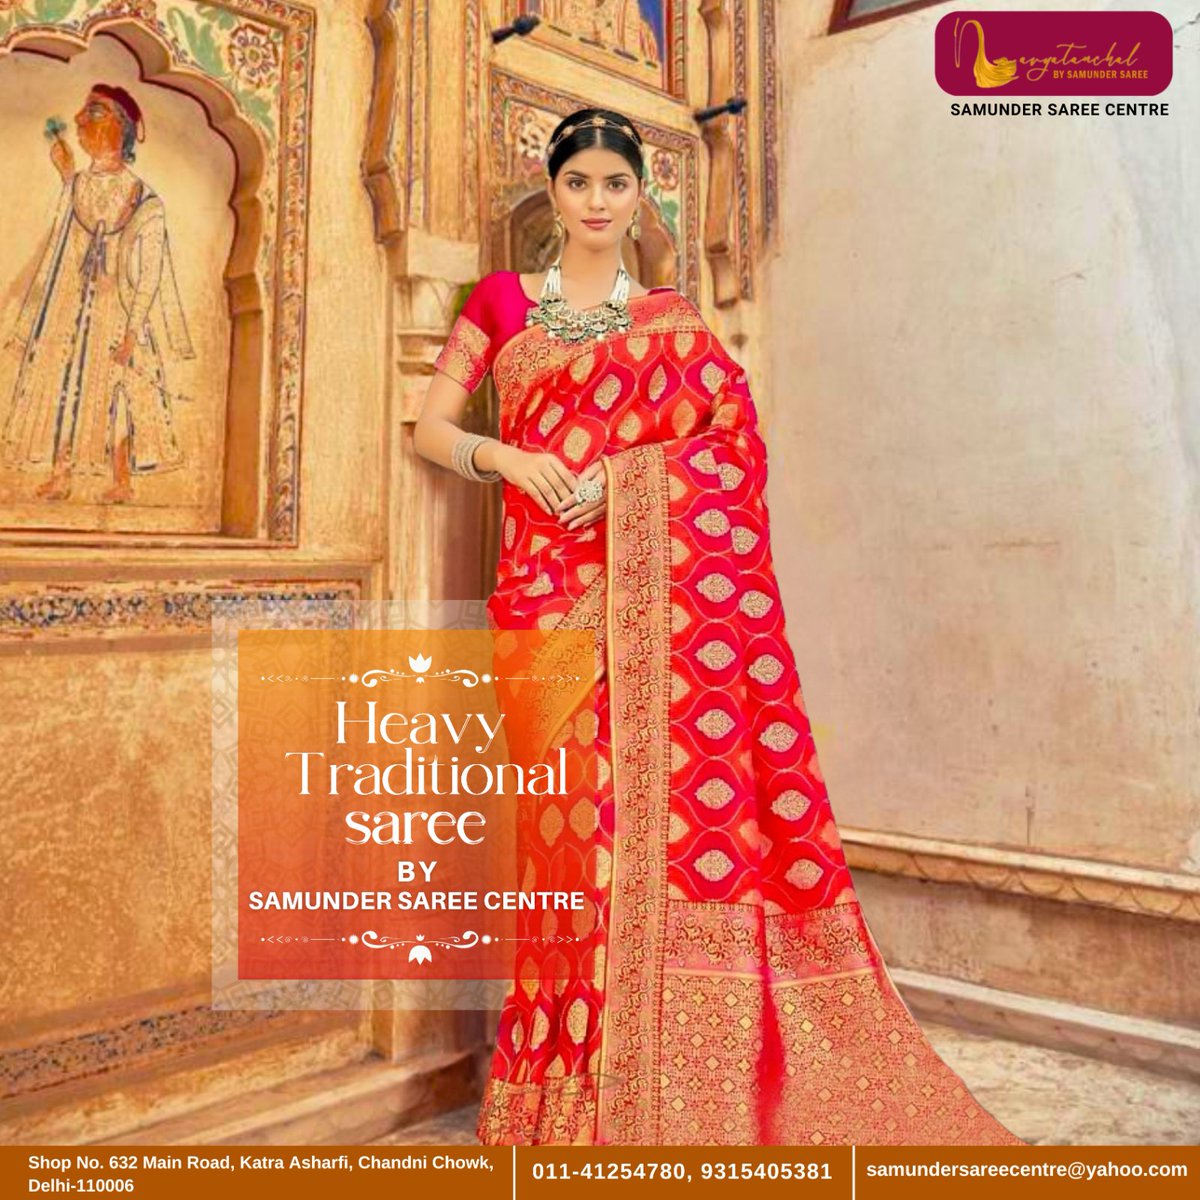 NAVYATANCHAL BY SAMUNDER SAREE
Wear a saree and make heads turn..
.
📍Shop No. 632 Main Road, Katra Asharfi, Chandni Chowk, Delhi-110006
📞011-41254780, 9315405381
🌐samundersareecentre@yahoo.com
.
.
#bridal #fashion #sareestyle #samundersaree #gravwebsolution #newdesign